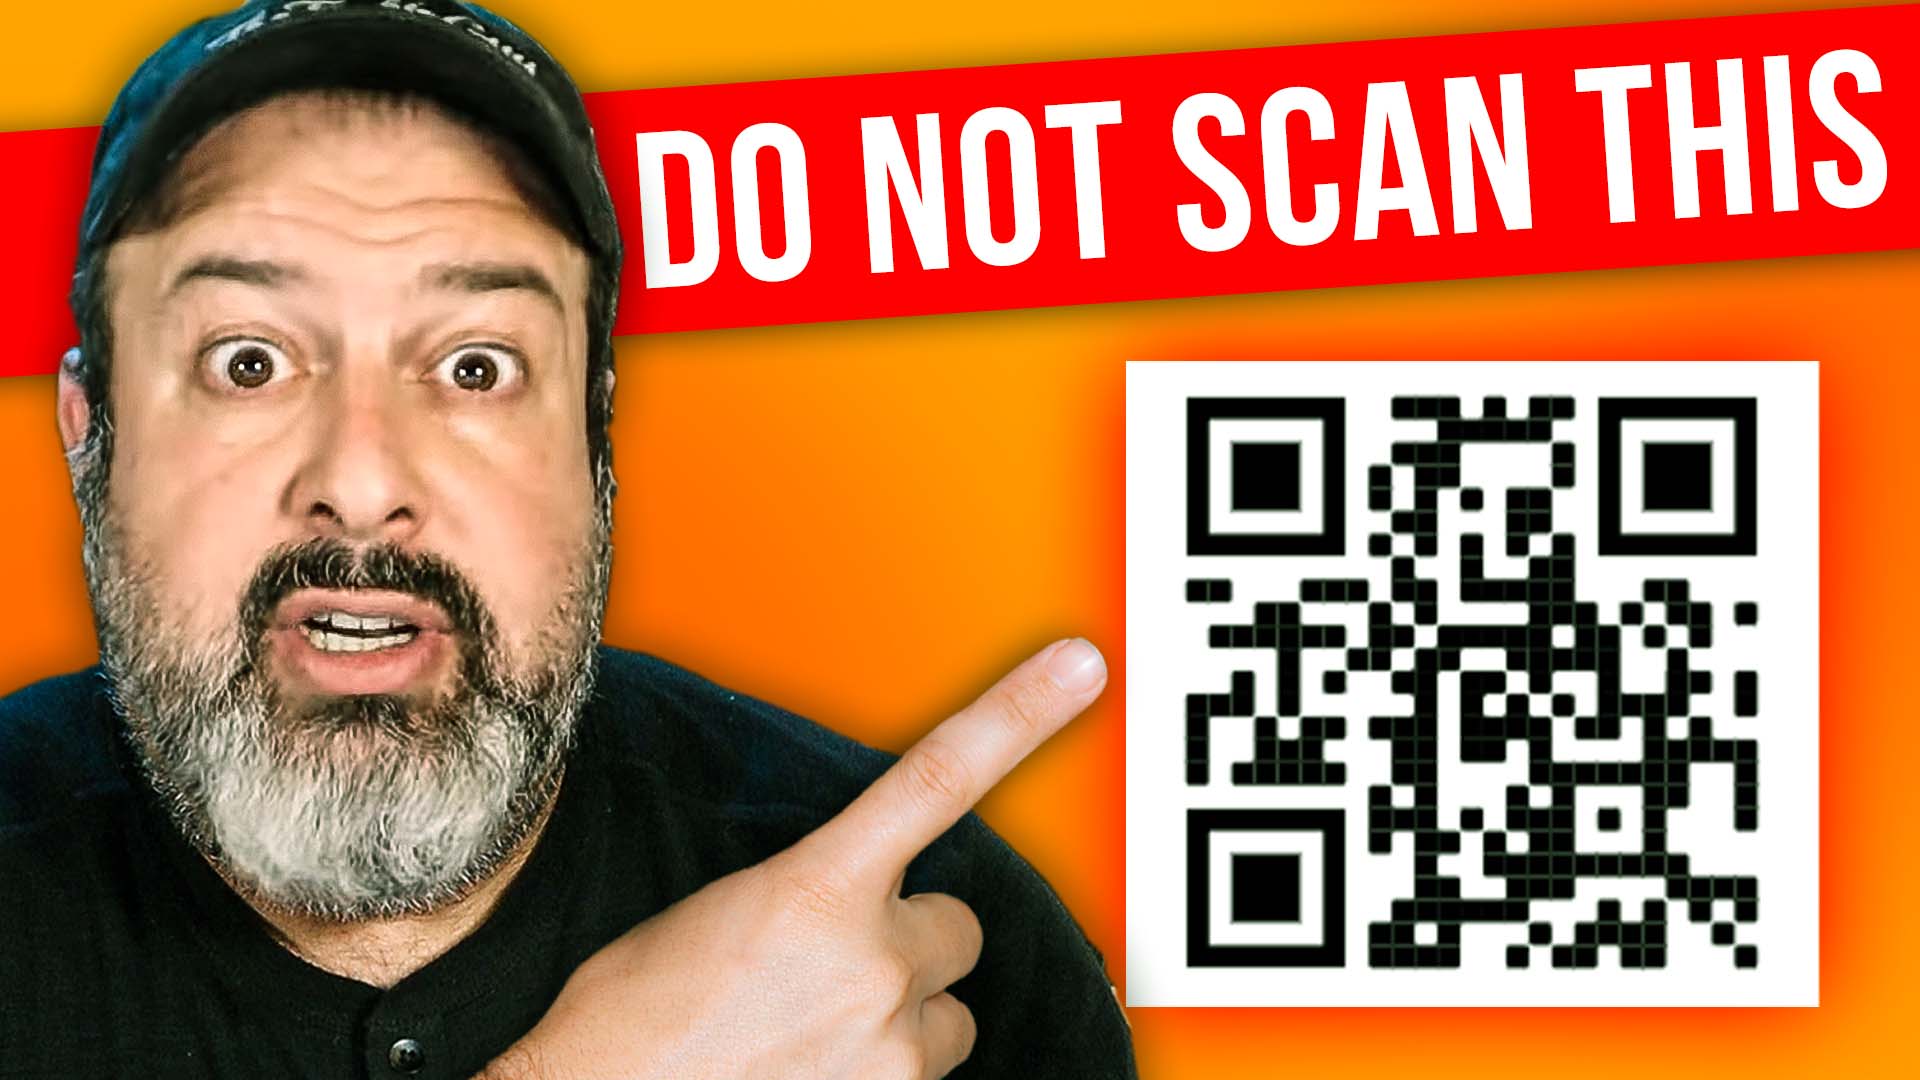 Stop scanning QR Codes!